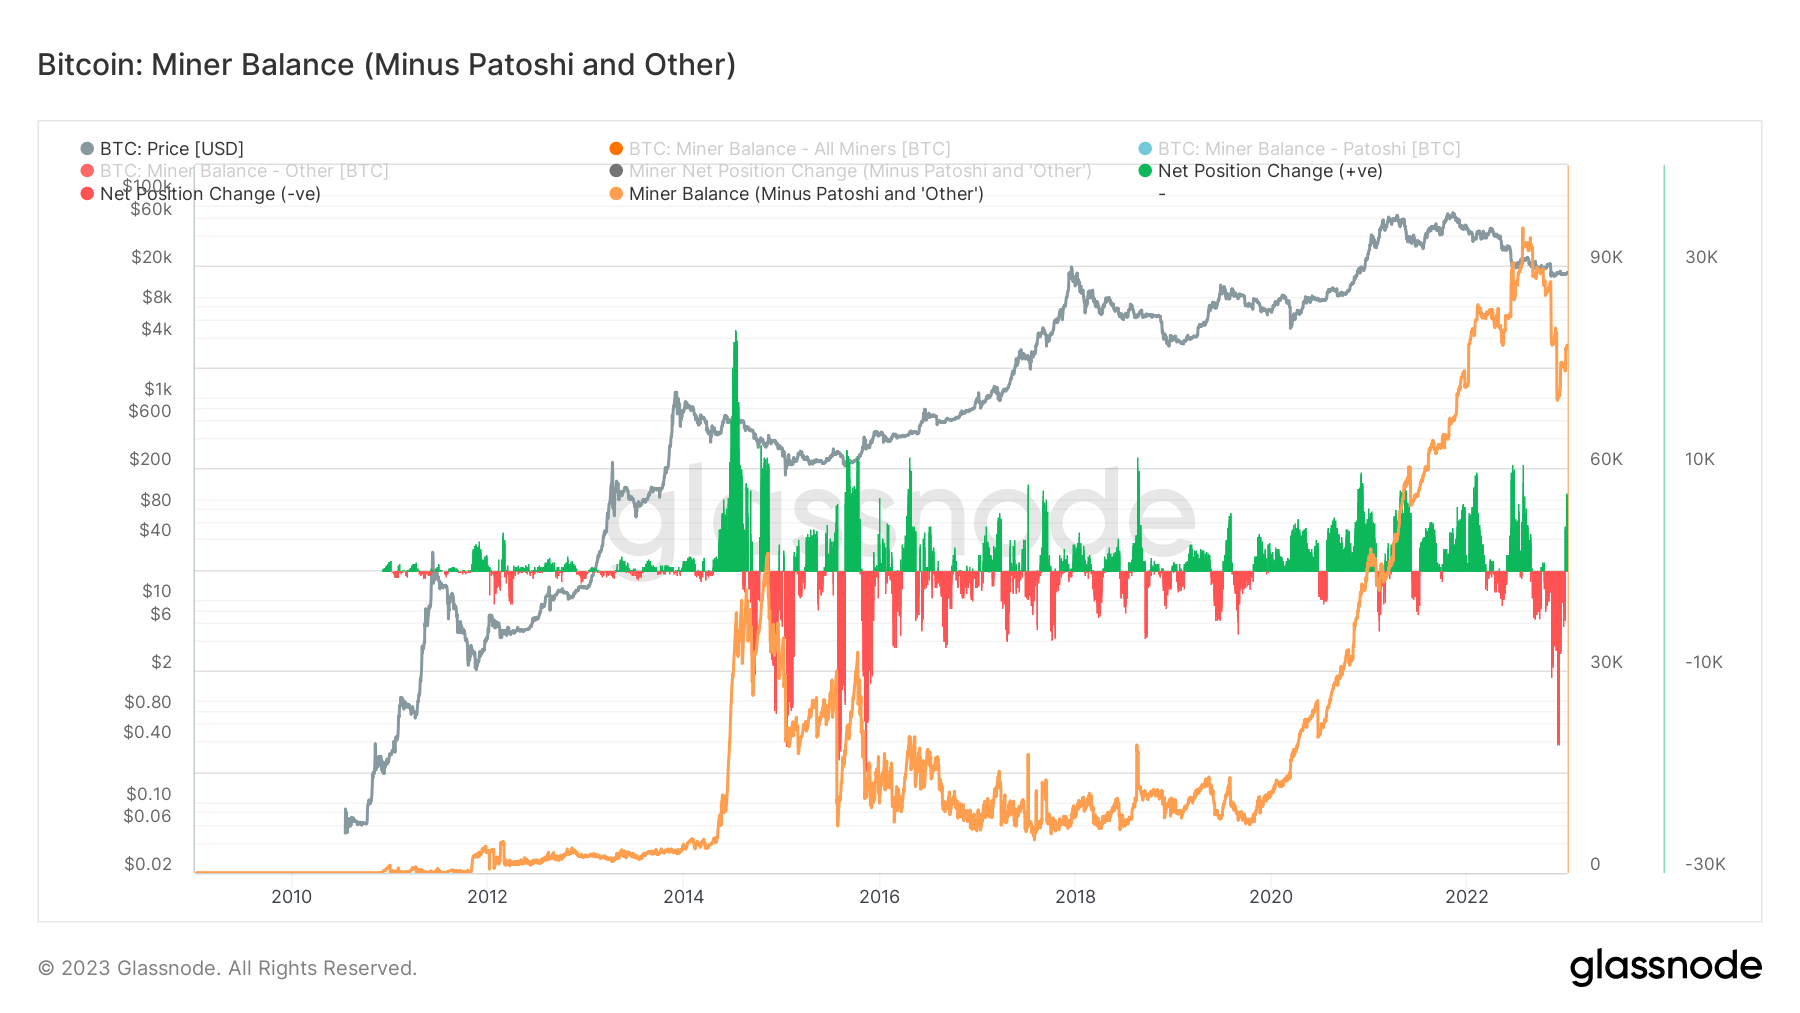 Bitcoin: Minor Balances (Minus Patoshi, etc.) - Source Glassnode.com